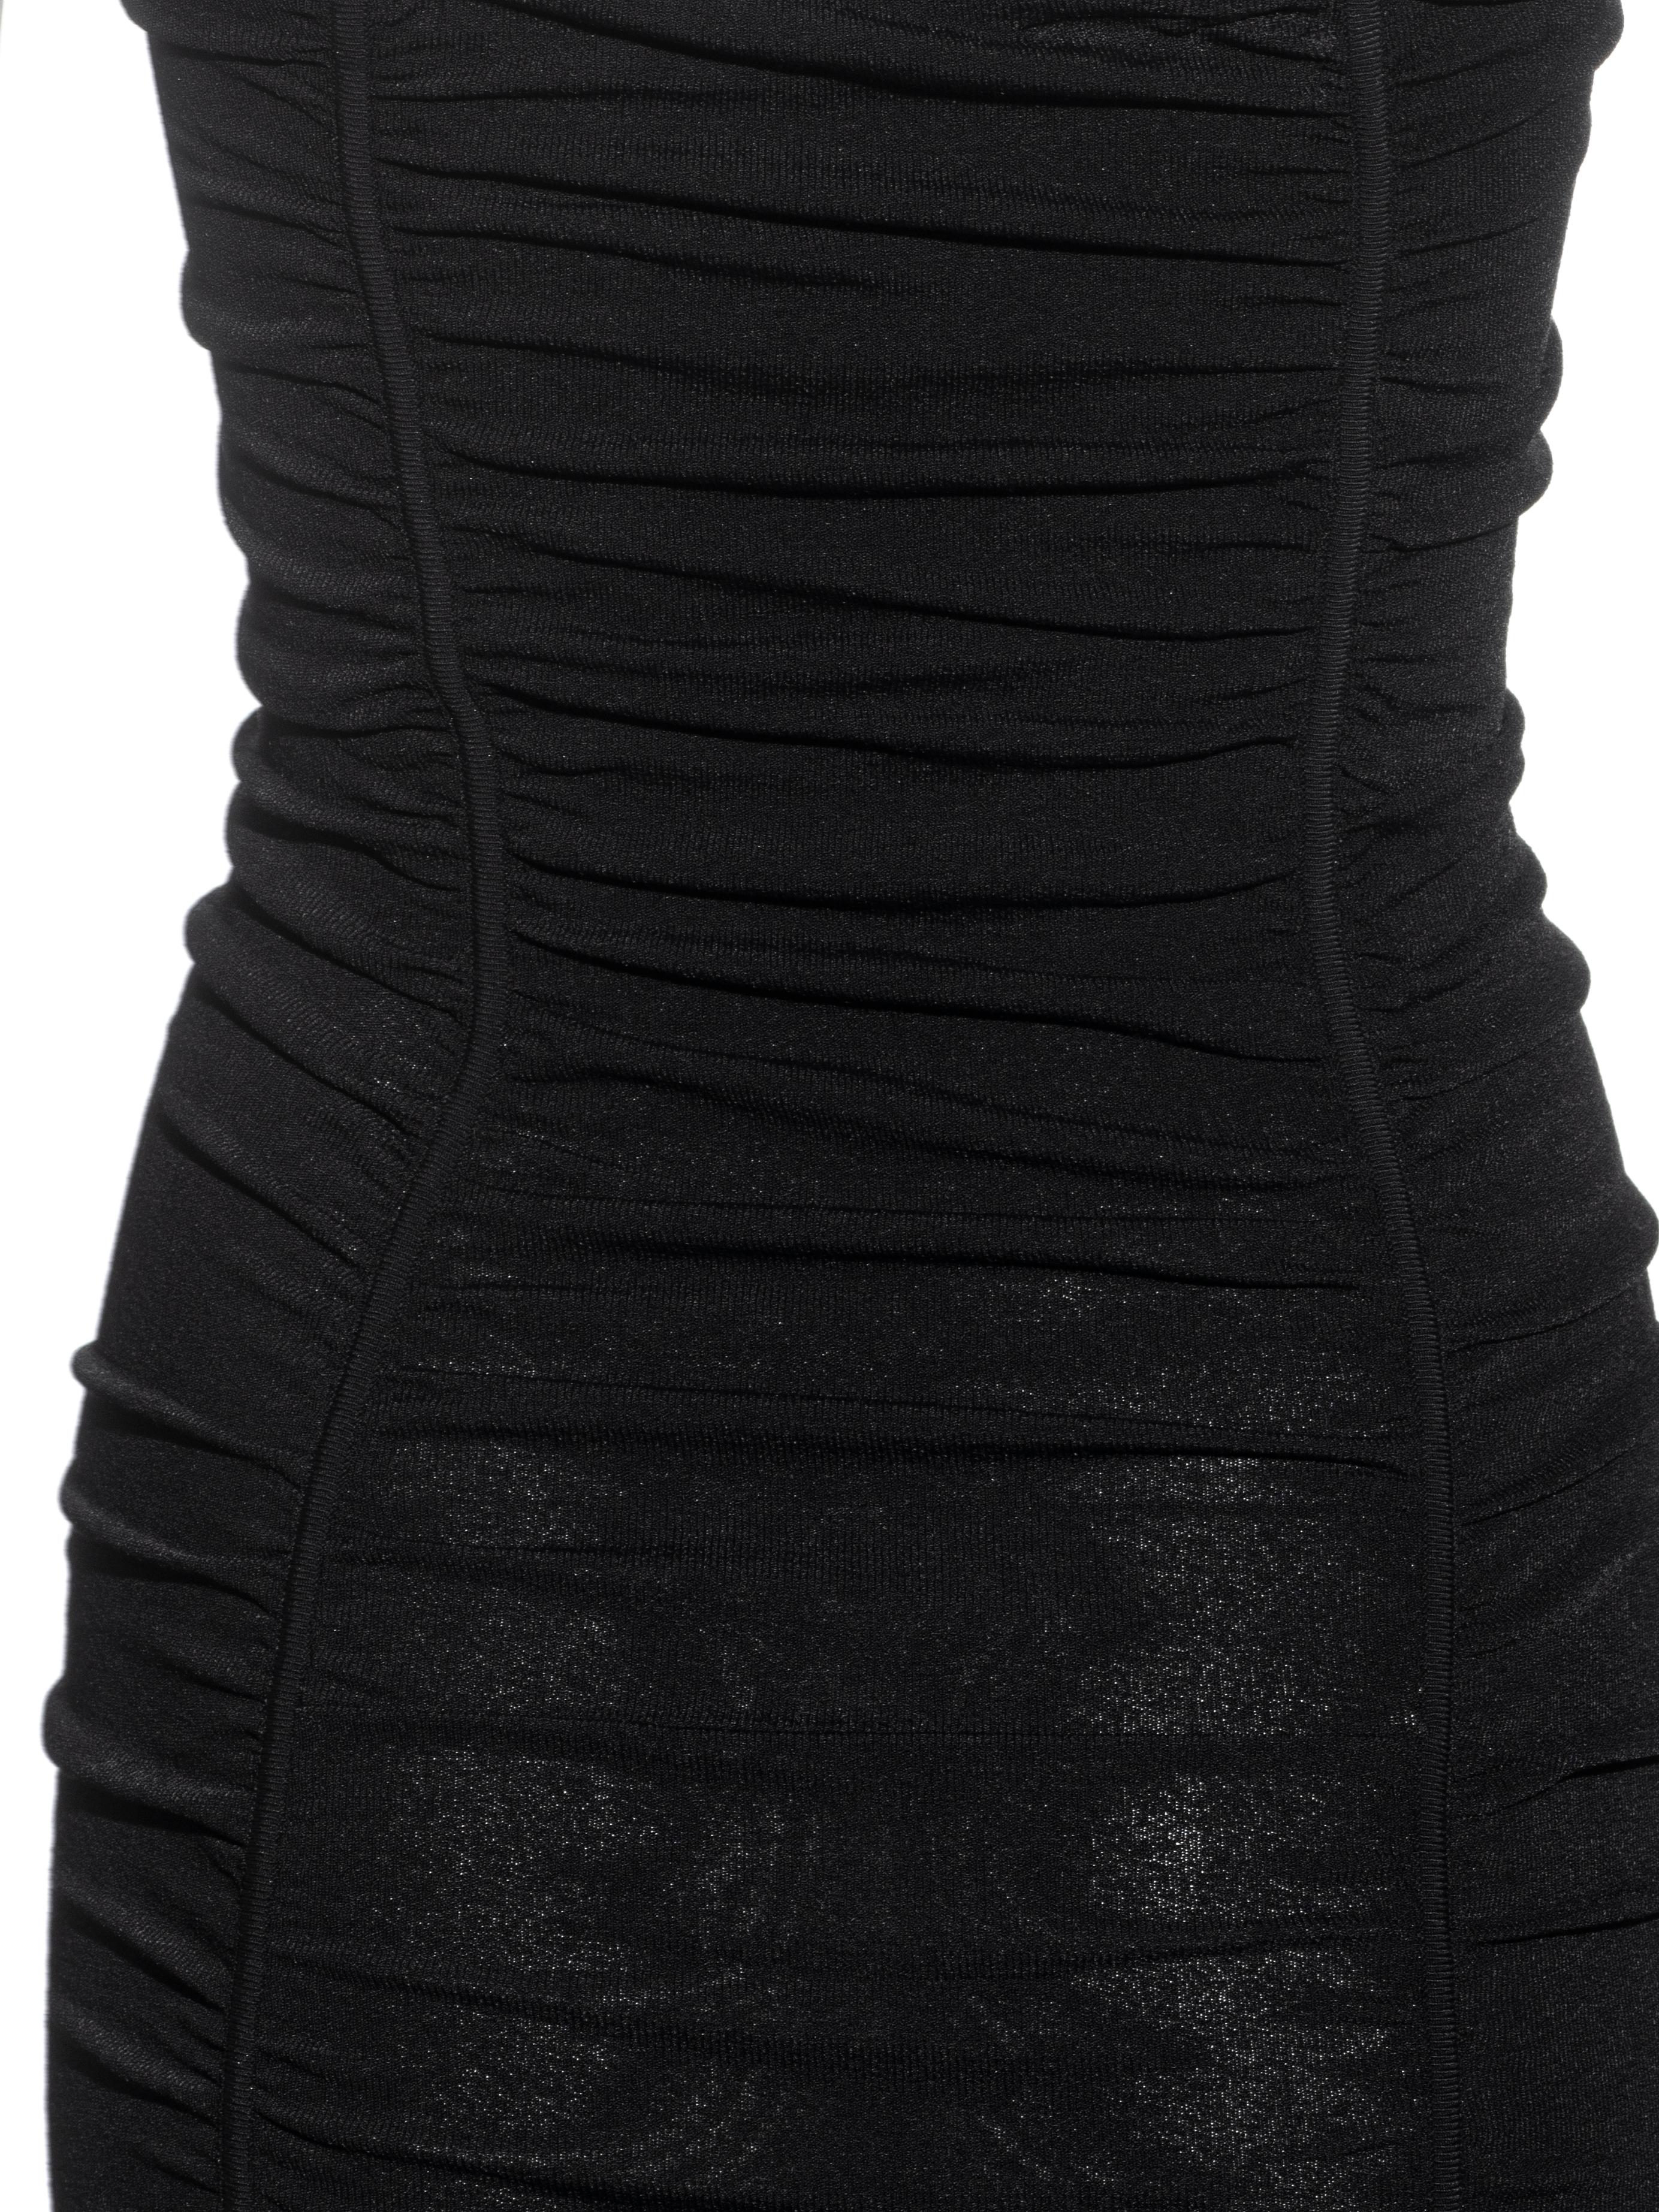 Dolce & Gabbana black ruched stretch-knit evening dress, ss 2001 3